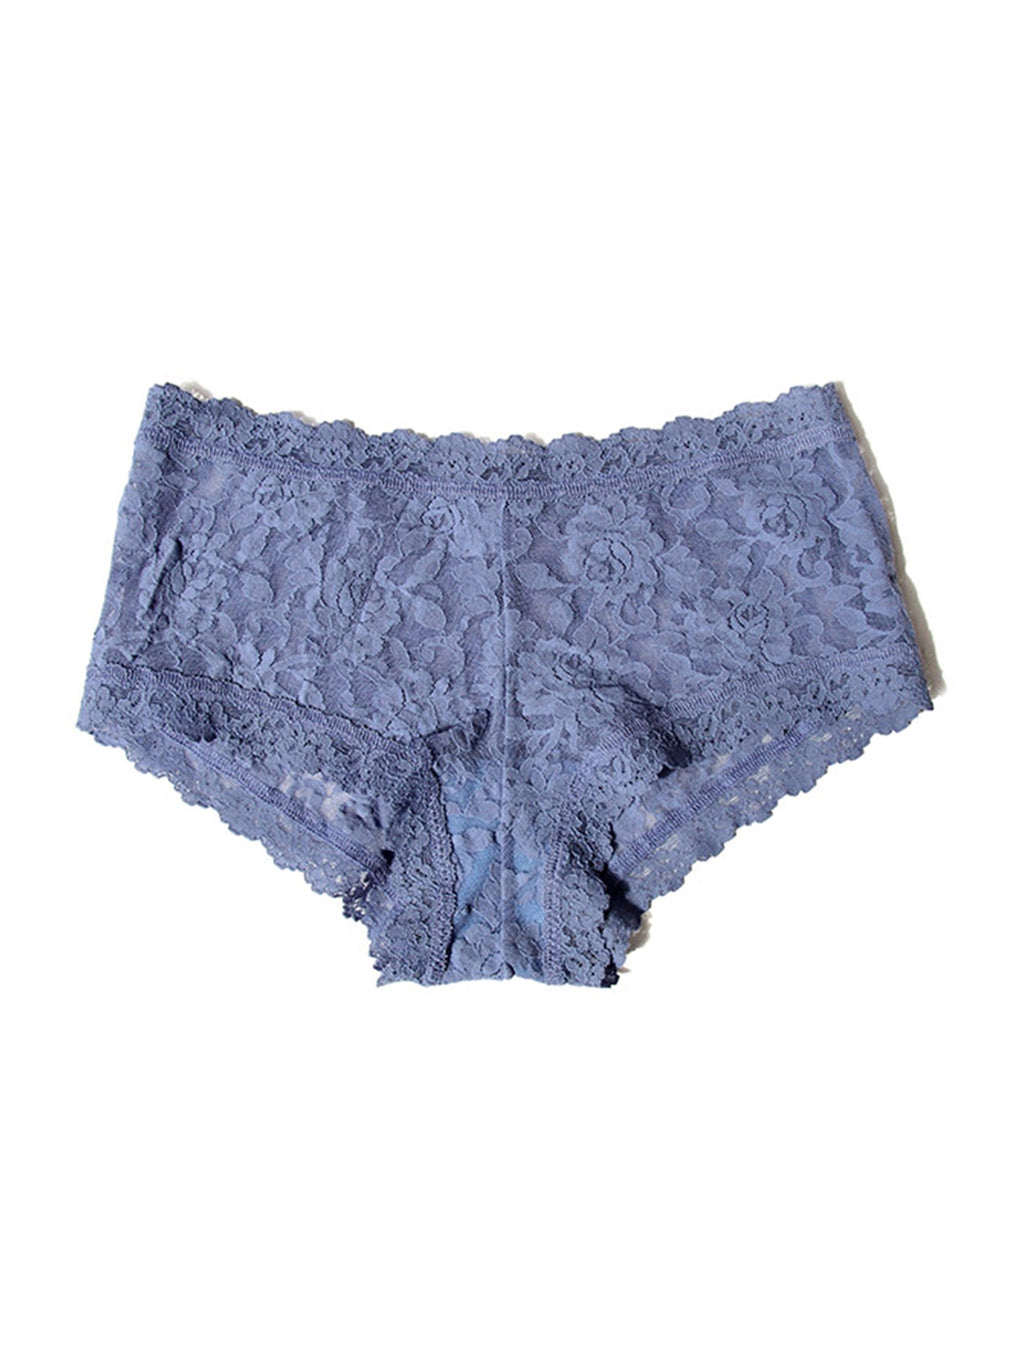 Hanky Panky Women's Signature Lace High Rise Boyshort Underwear, 481292 -  Macy's